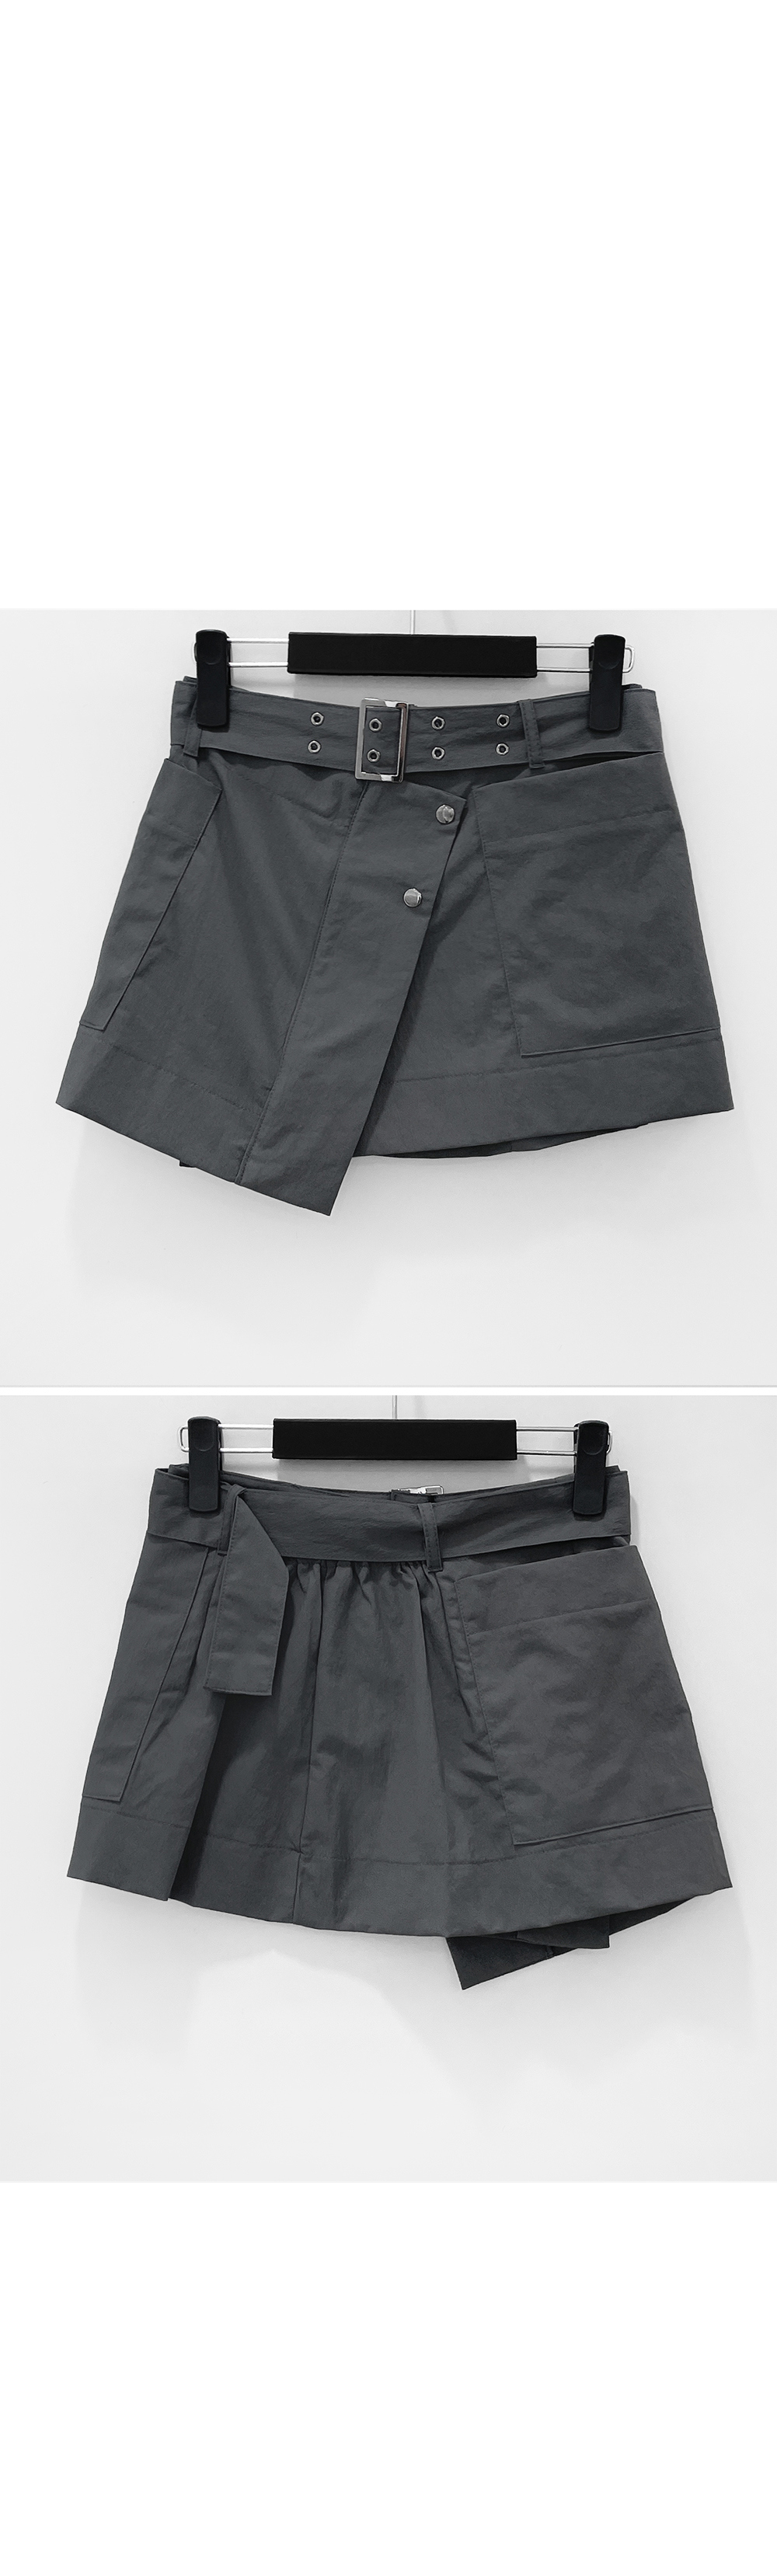 shorts khaki color image-S1L12